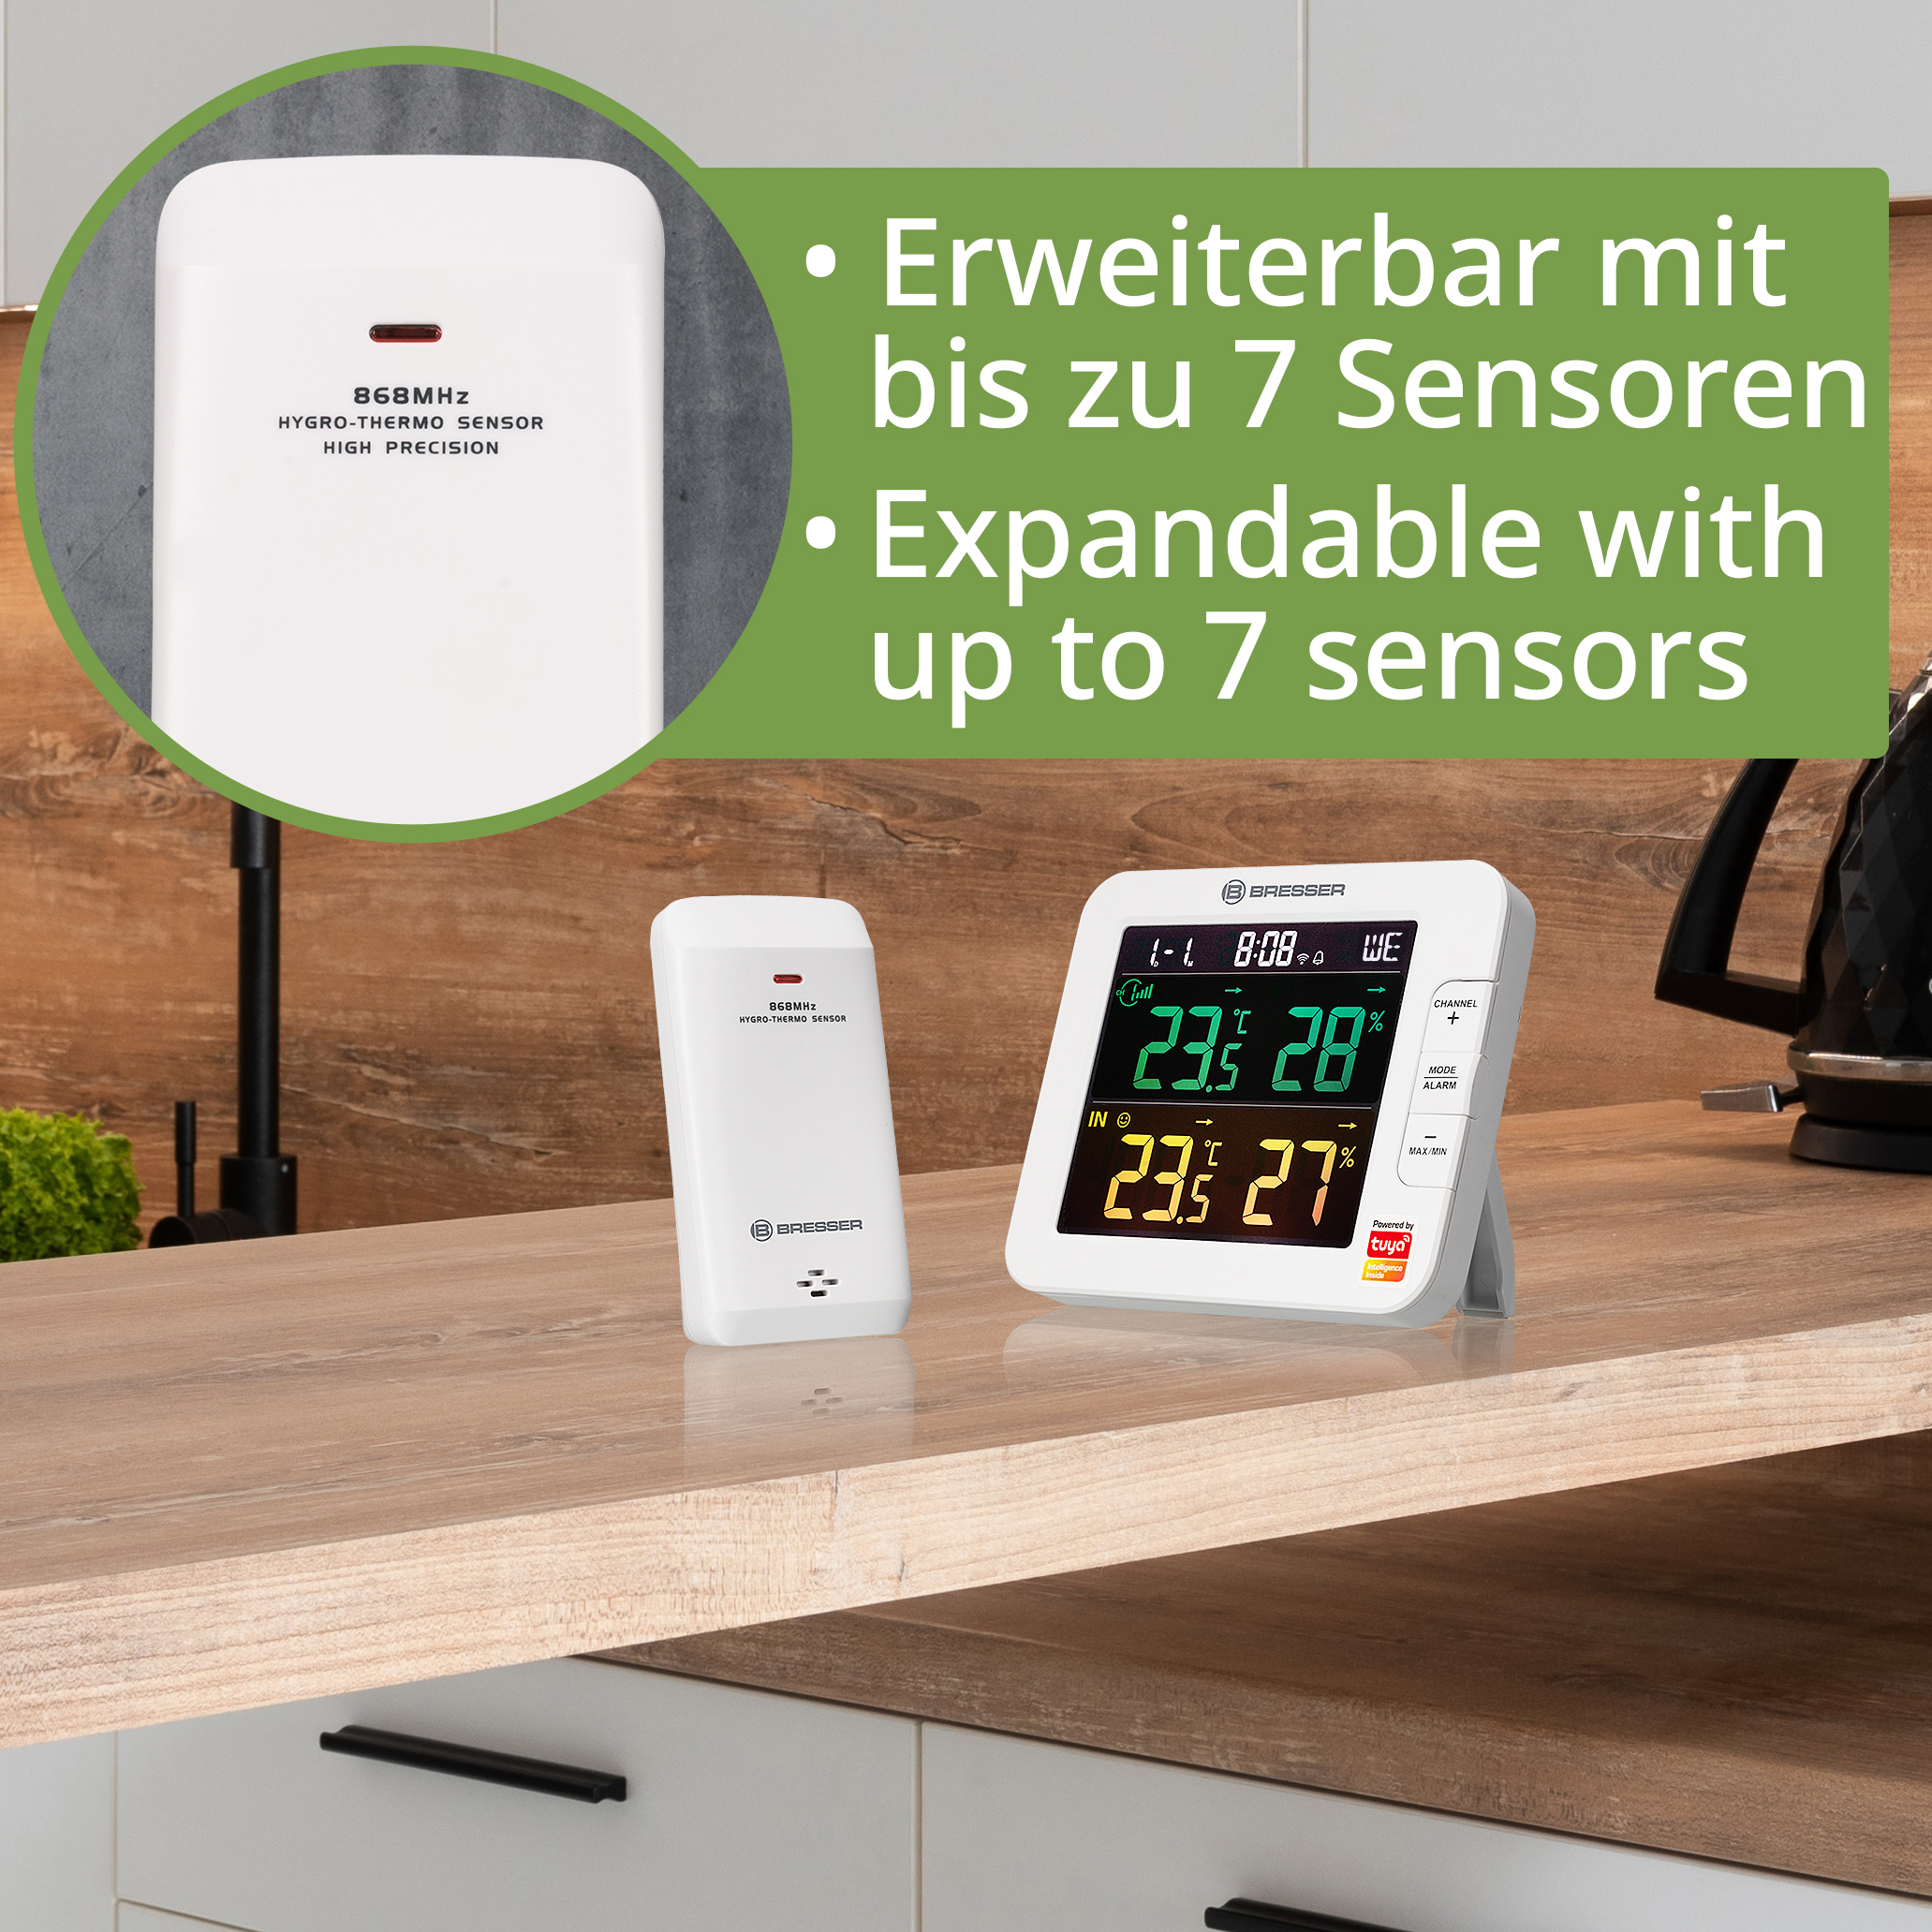 BRESSER Smart Home 7 Channel Tuya Thermometer/Hygrometer